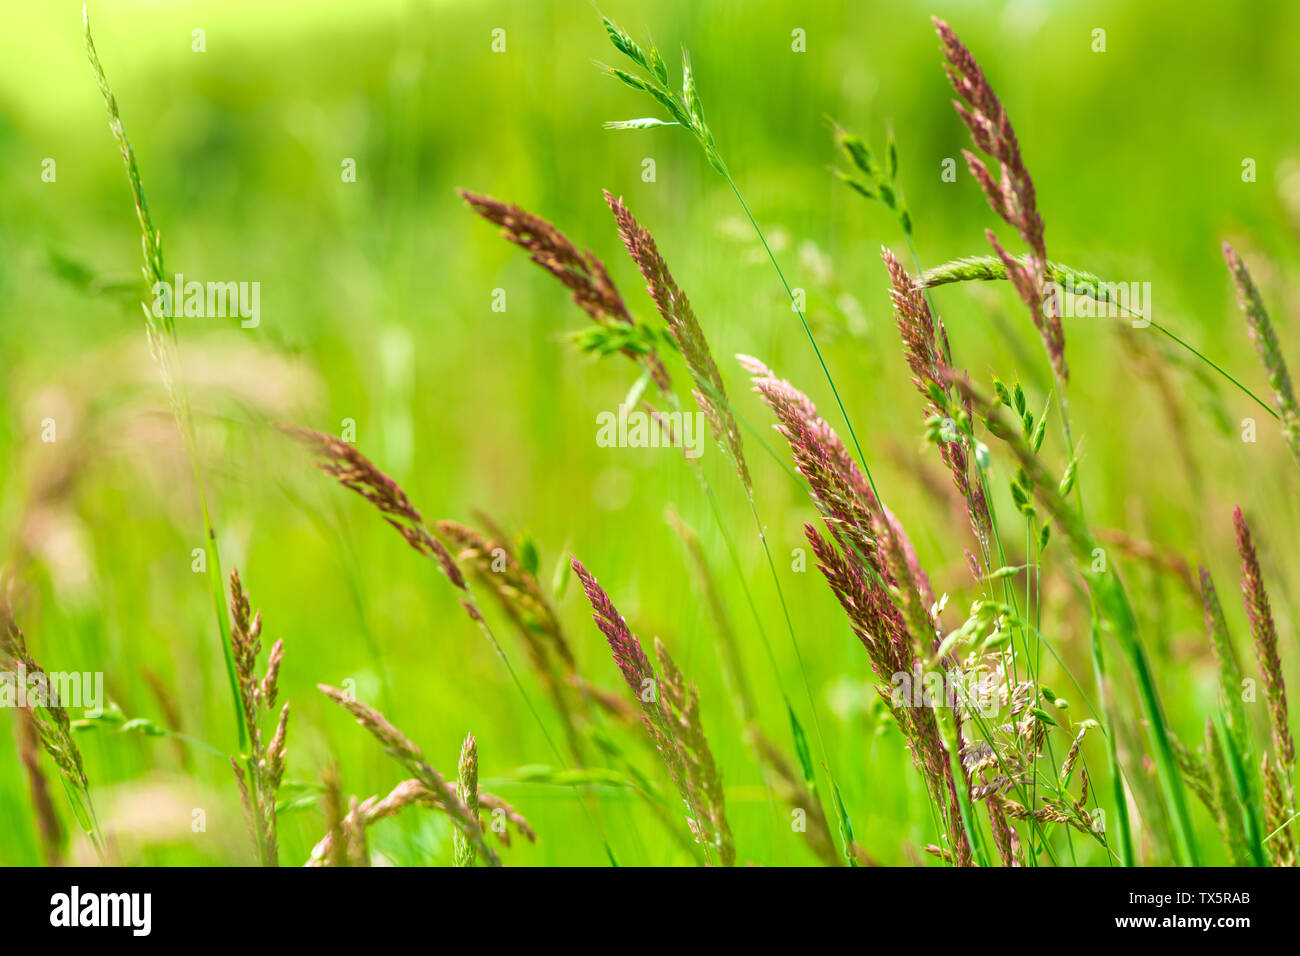 Natural growing motley  grass field (sweetgrass, hierochloe). Soft focus. Nature background Stock Photo